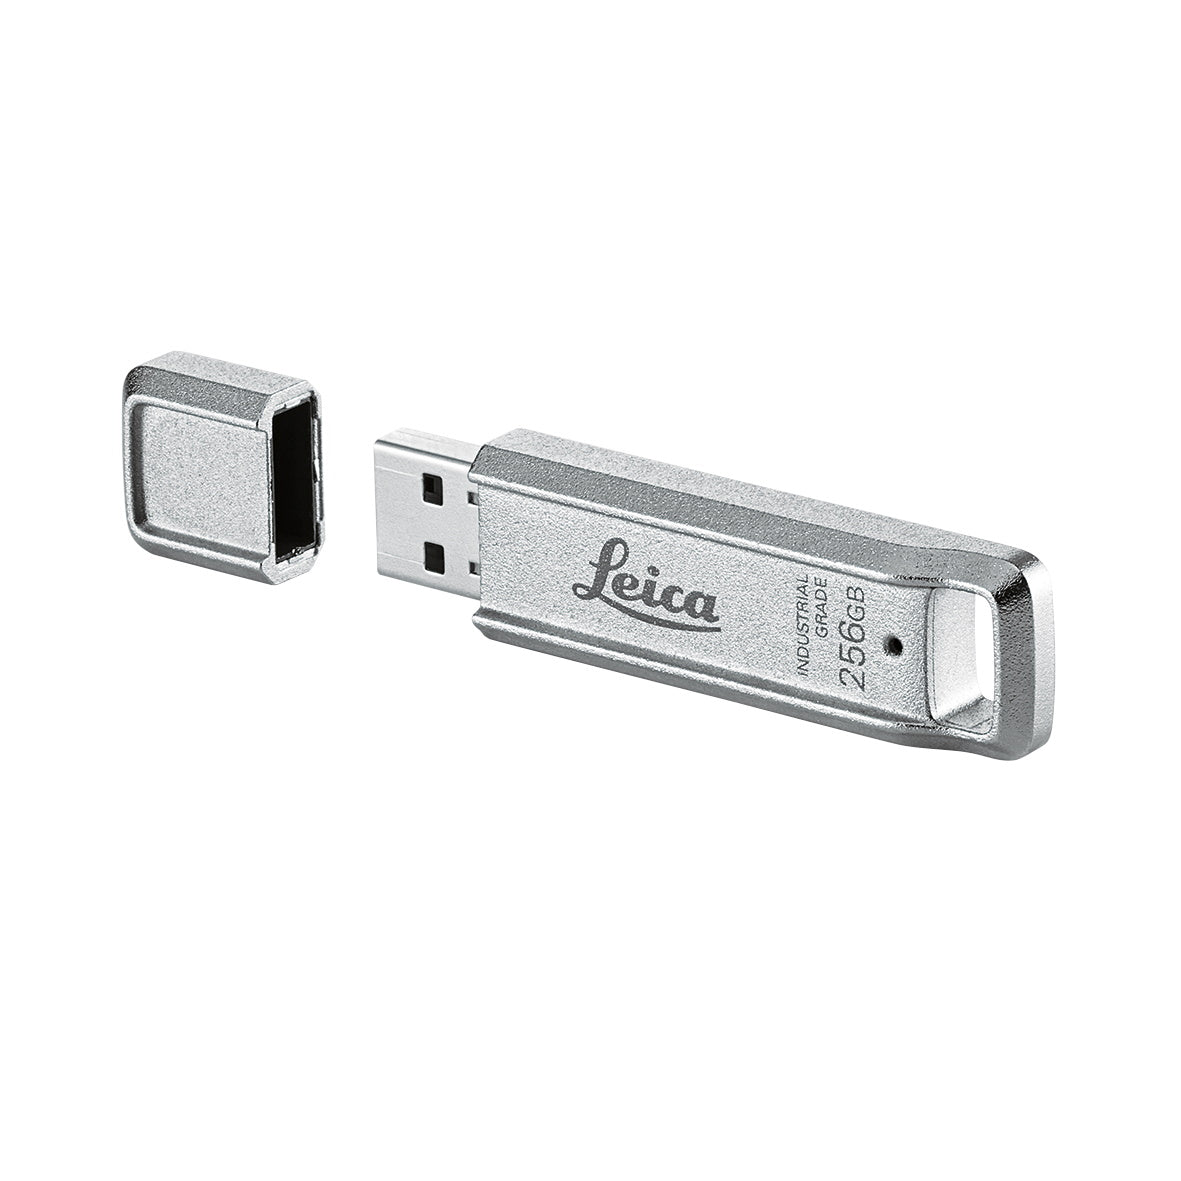 Leica RTC 360 USB Stick